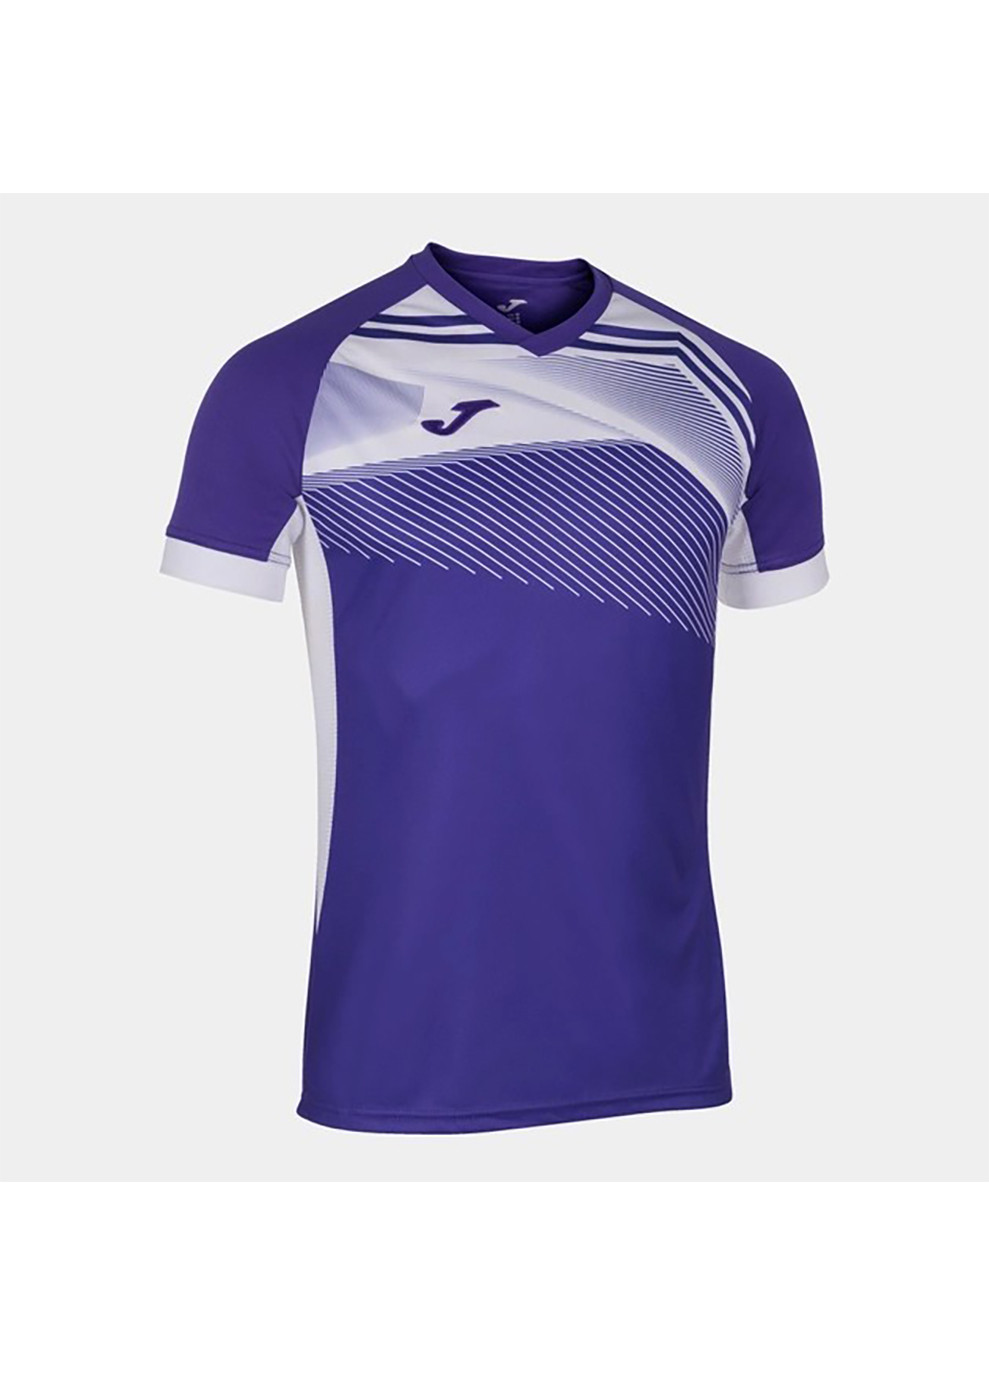 Фиолетовая футболка supernova ii t-shirt purple-white s/s фиолетовый Joma